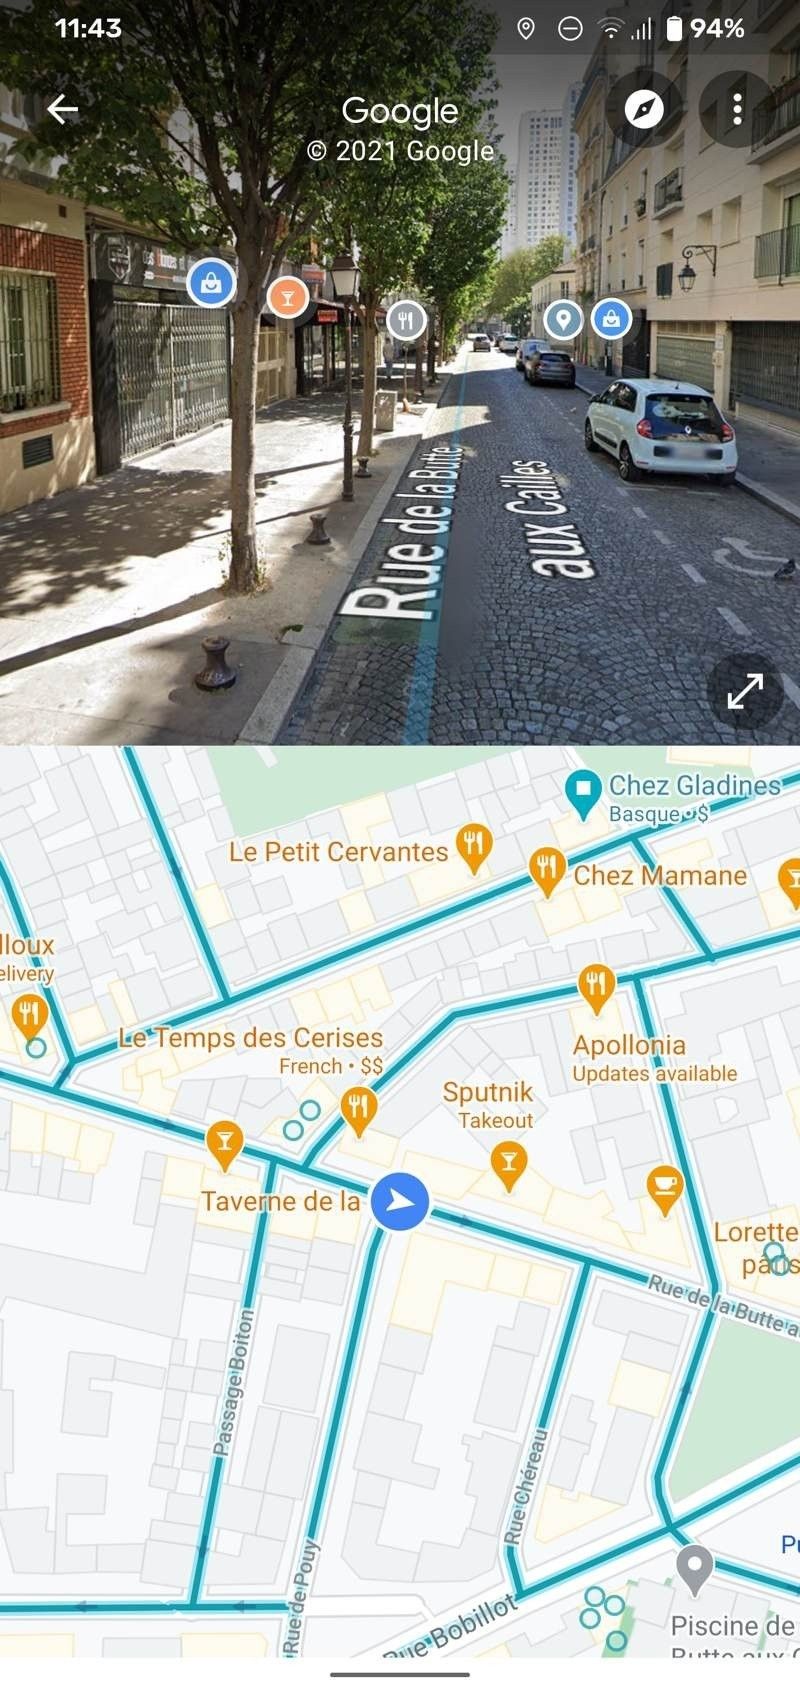 Google Maps και Street View ανοίγουν ταυτόχρονα σε Split Screen στις συσκευές Android